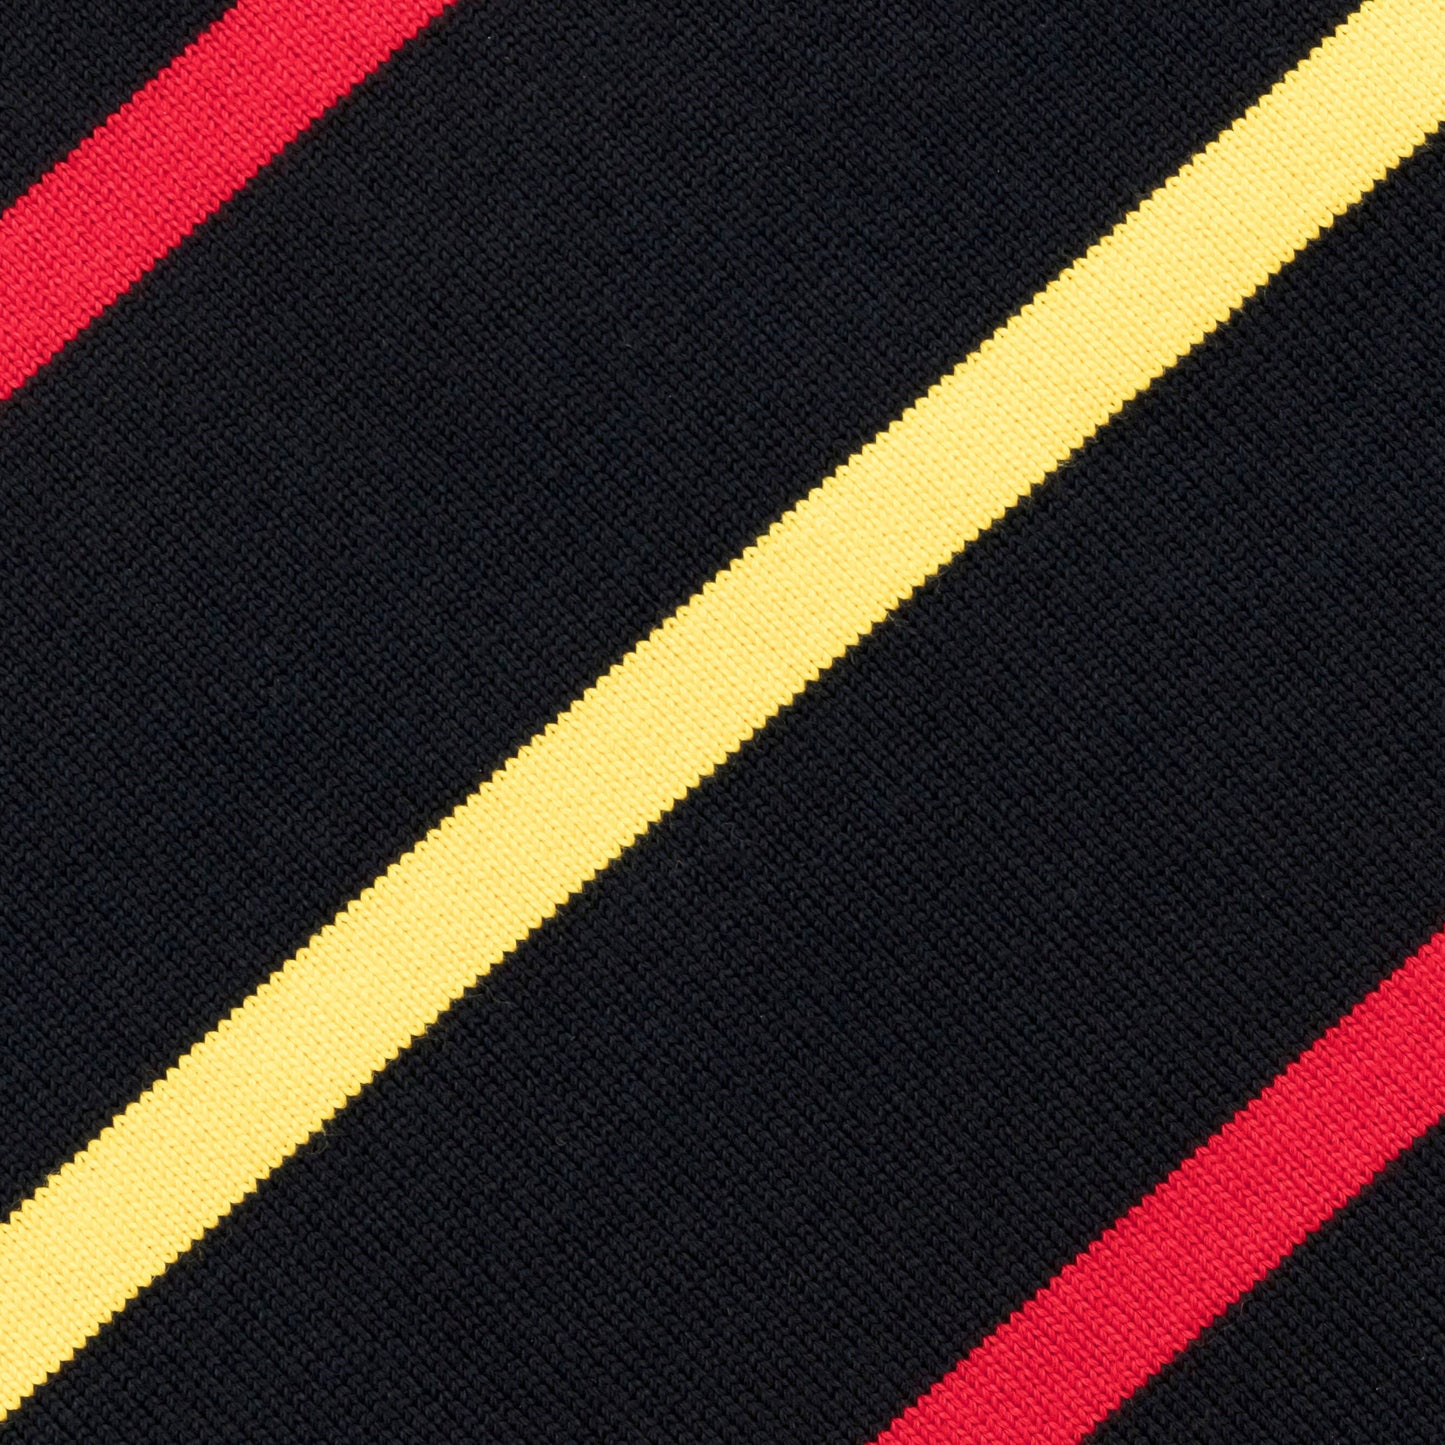 Detail of horizontal stripes.